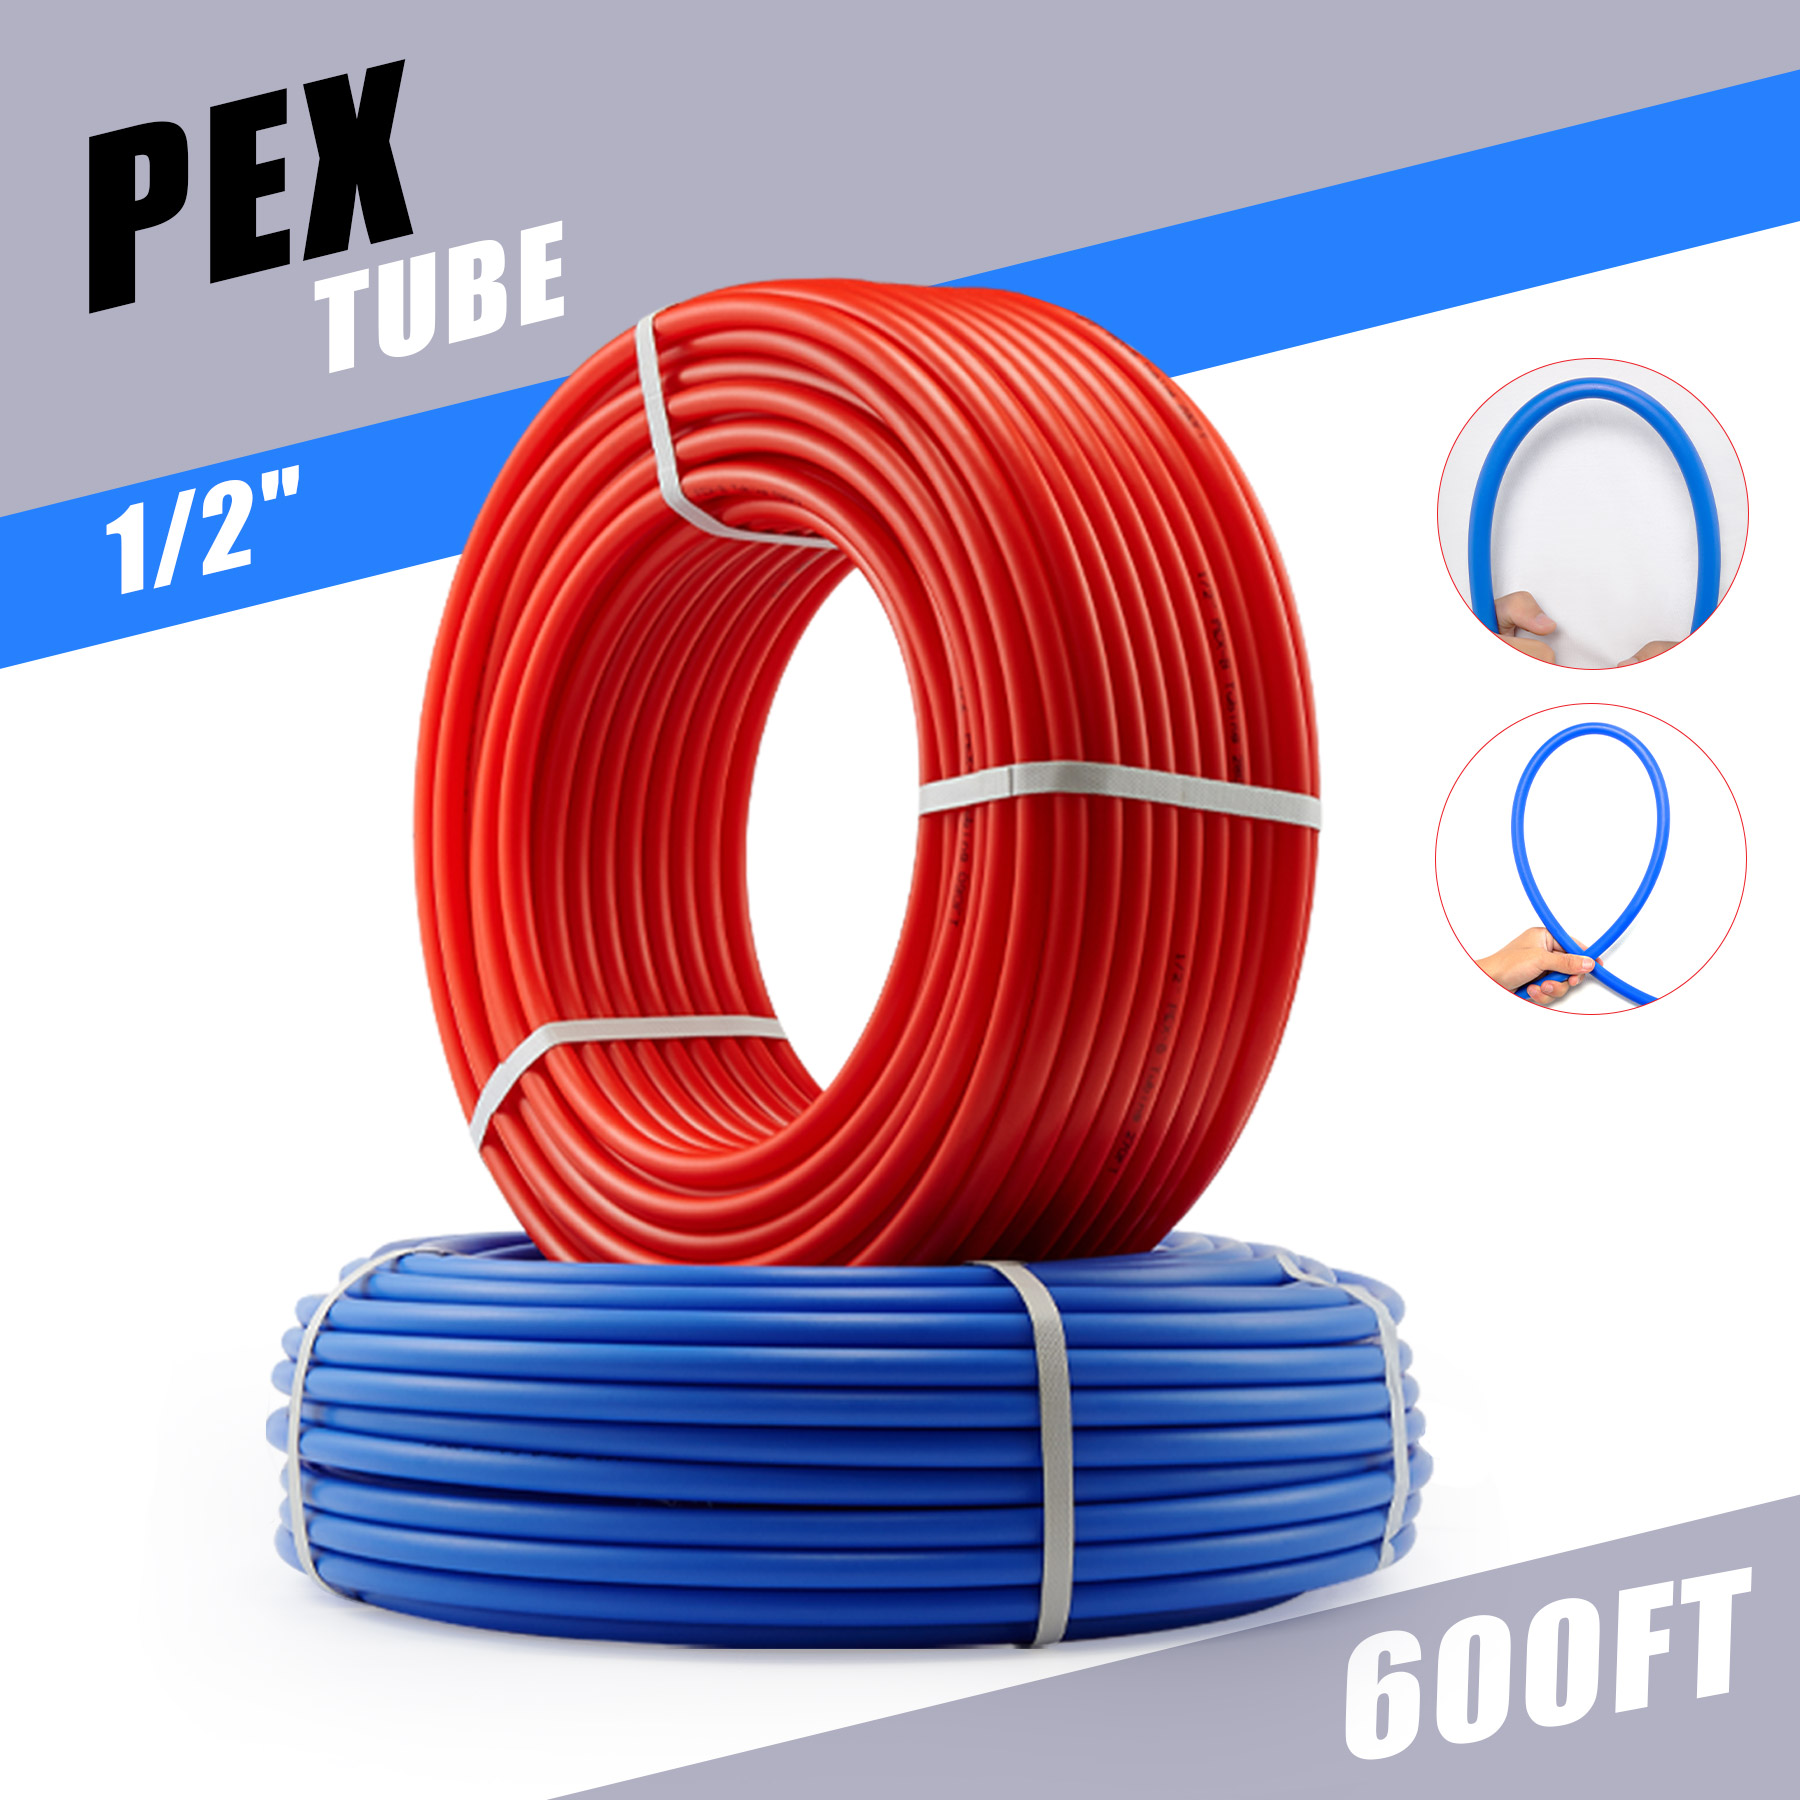 1/2 in. PEX Pipes 2x300ft Tubing PEX-B Plumbing Tubes for Radiant Floor Heating - image 1 of 1